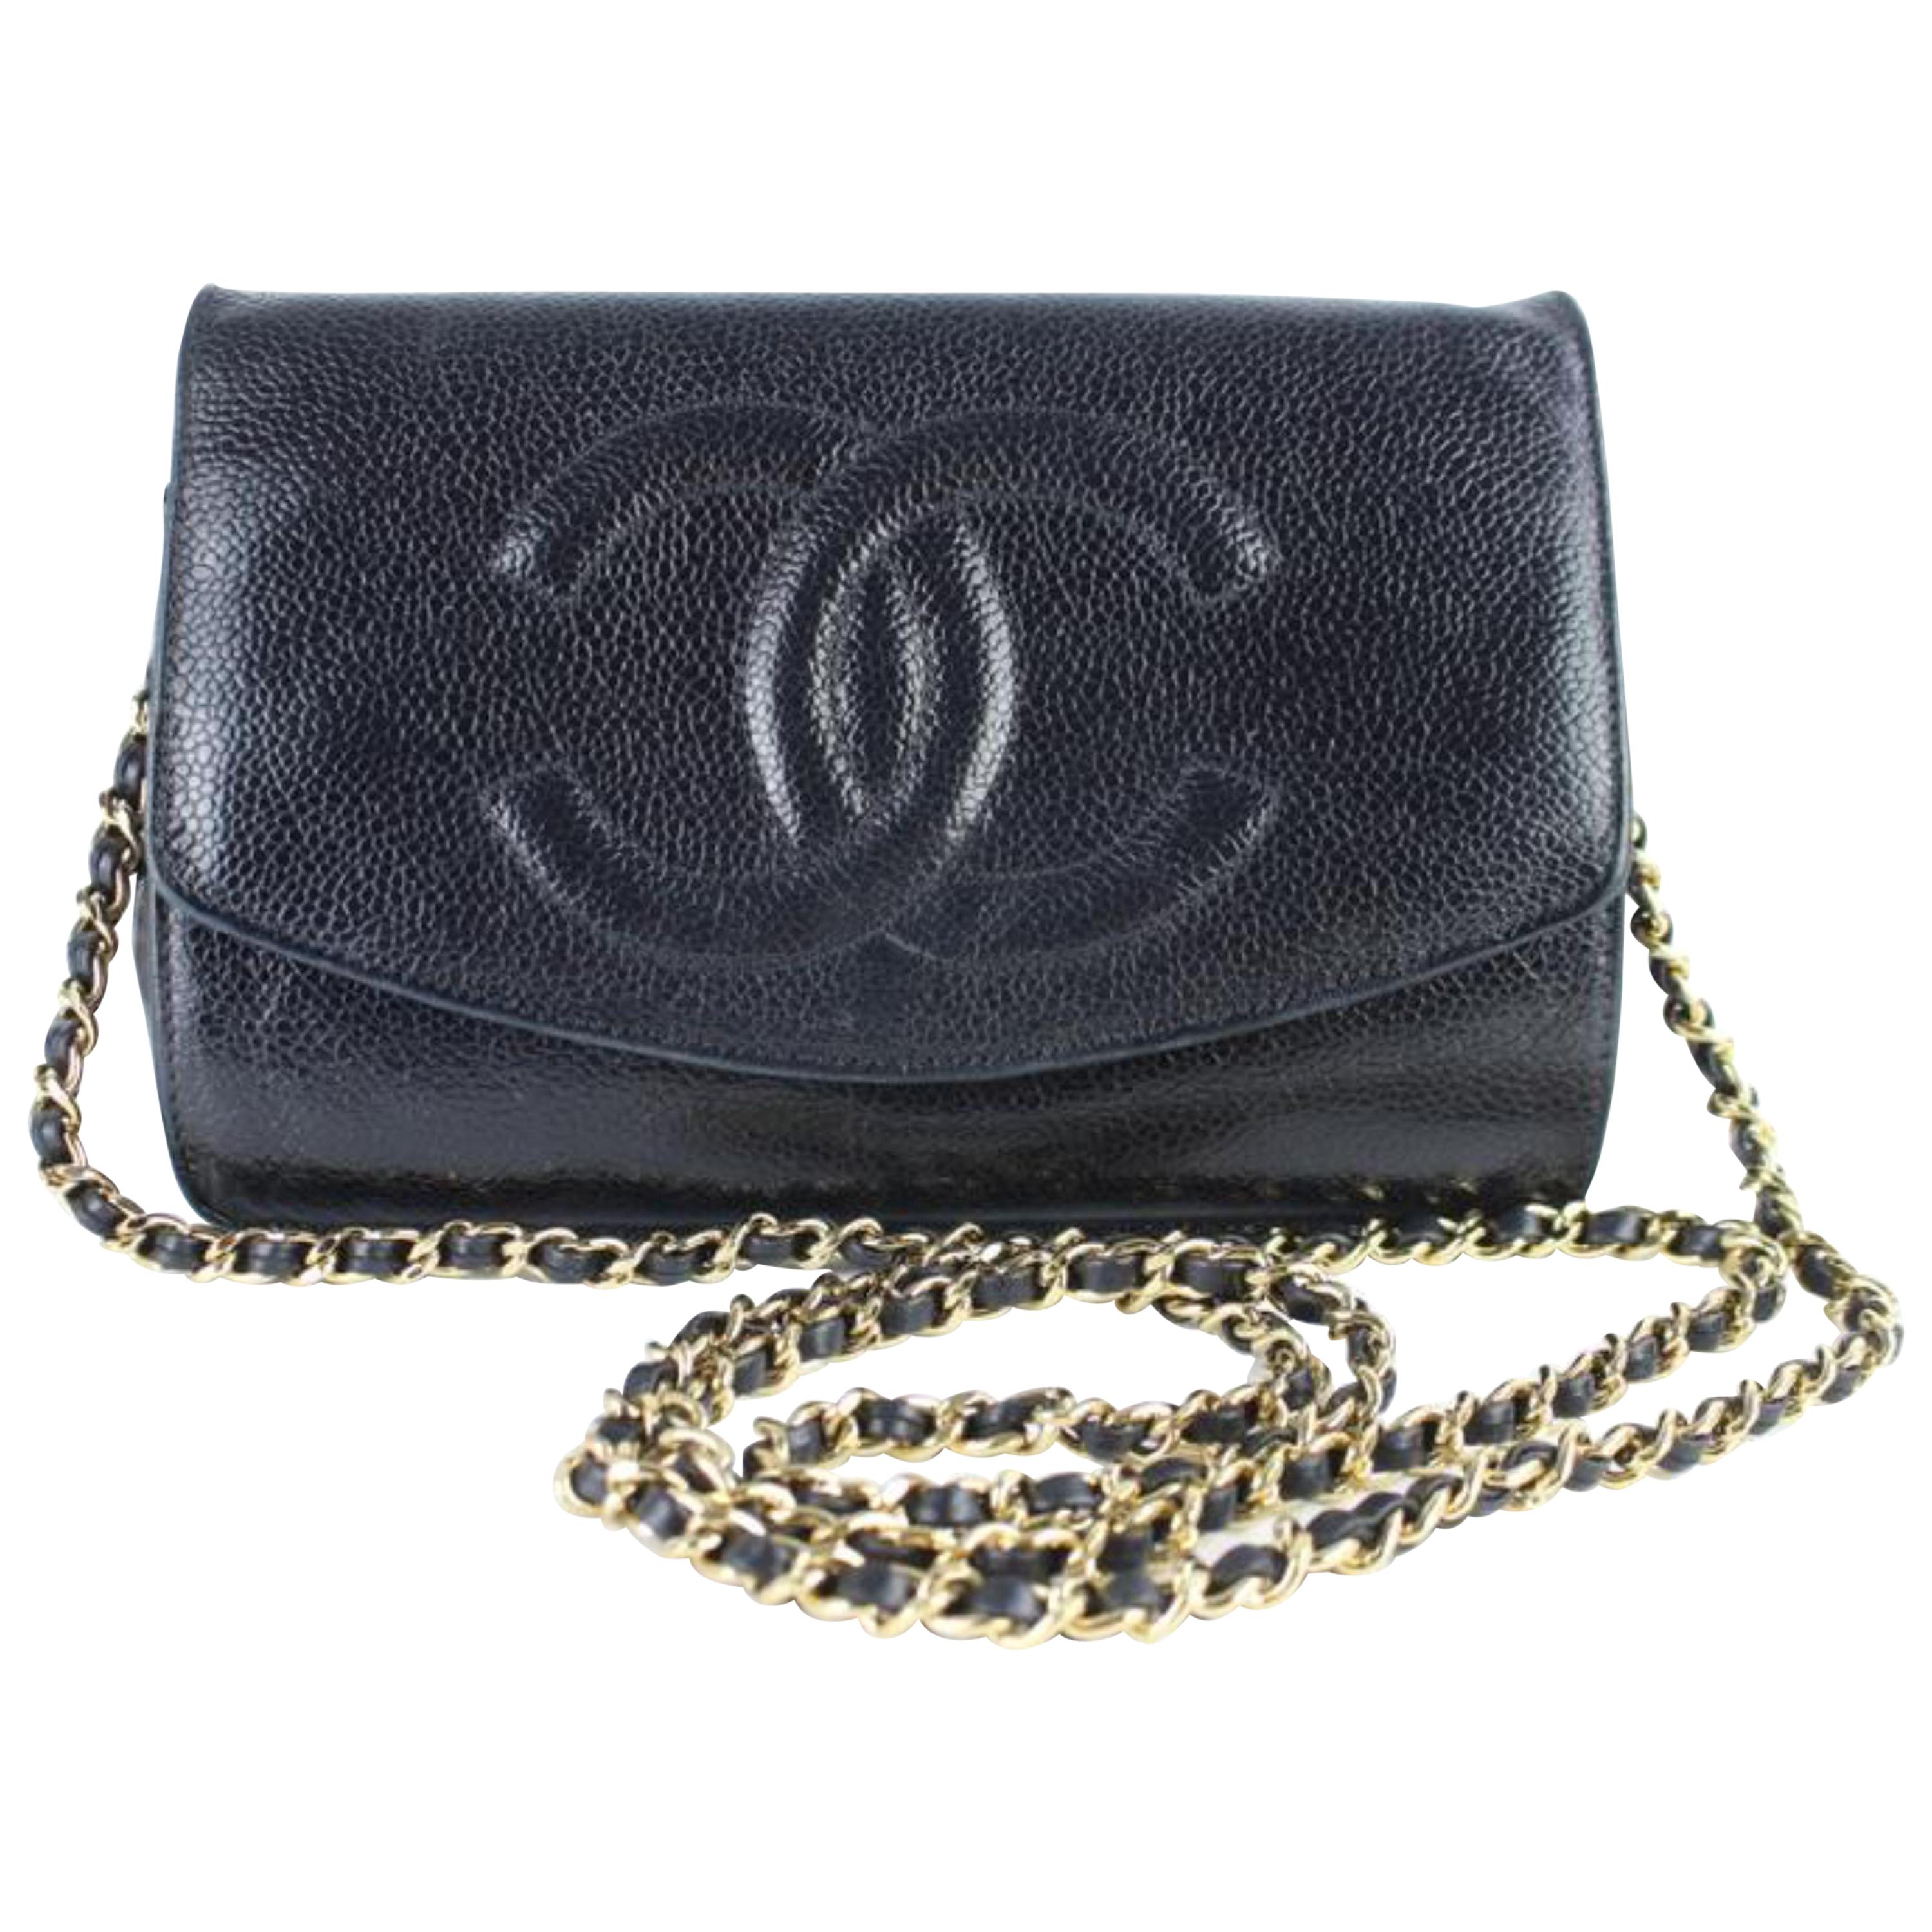 Chanel Wallet on Chain Caviar Flap 11cz0123 Black Leather Shoulder Bag For Sale